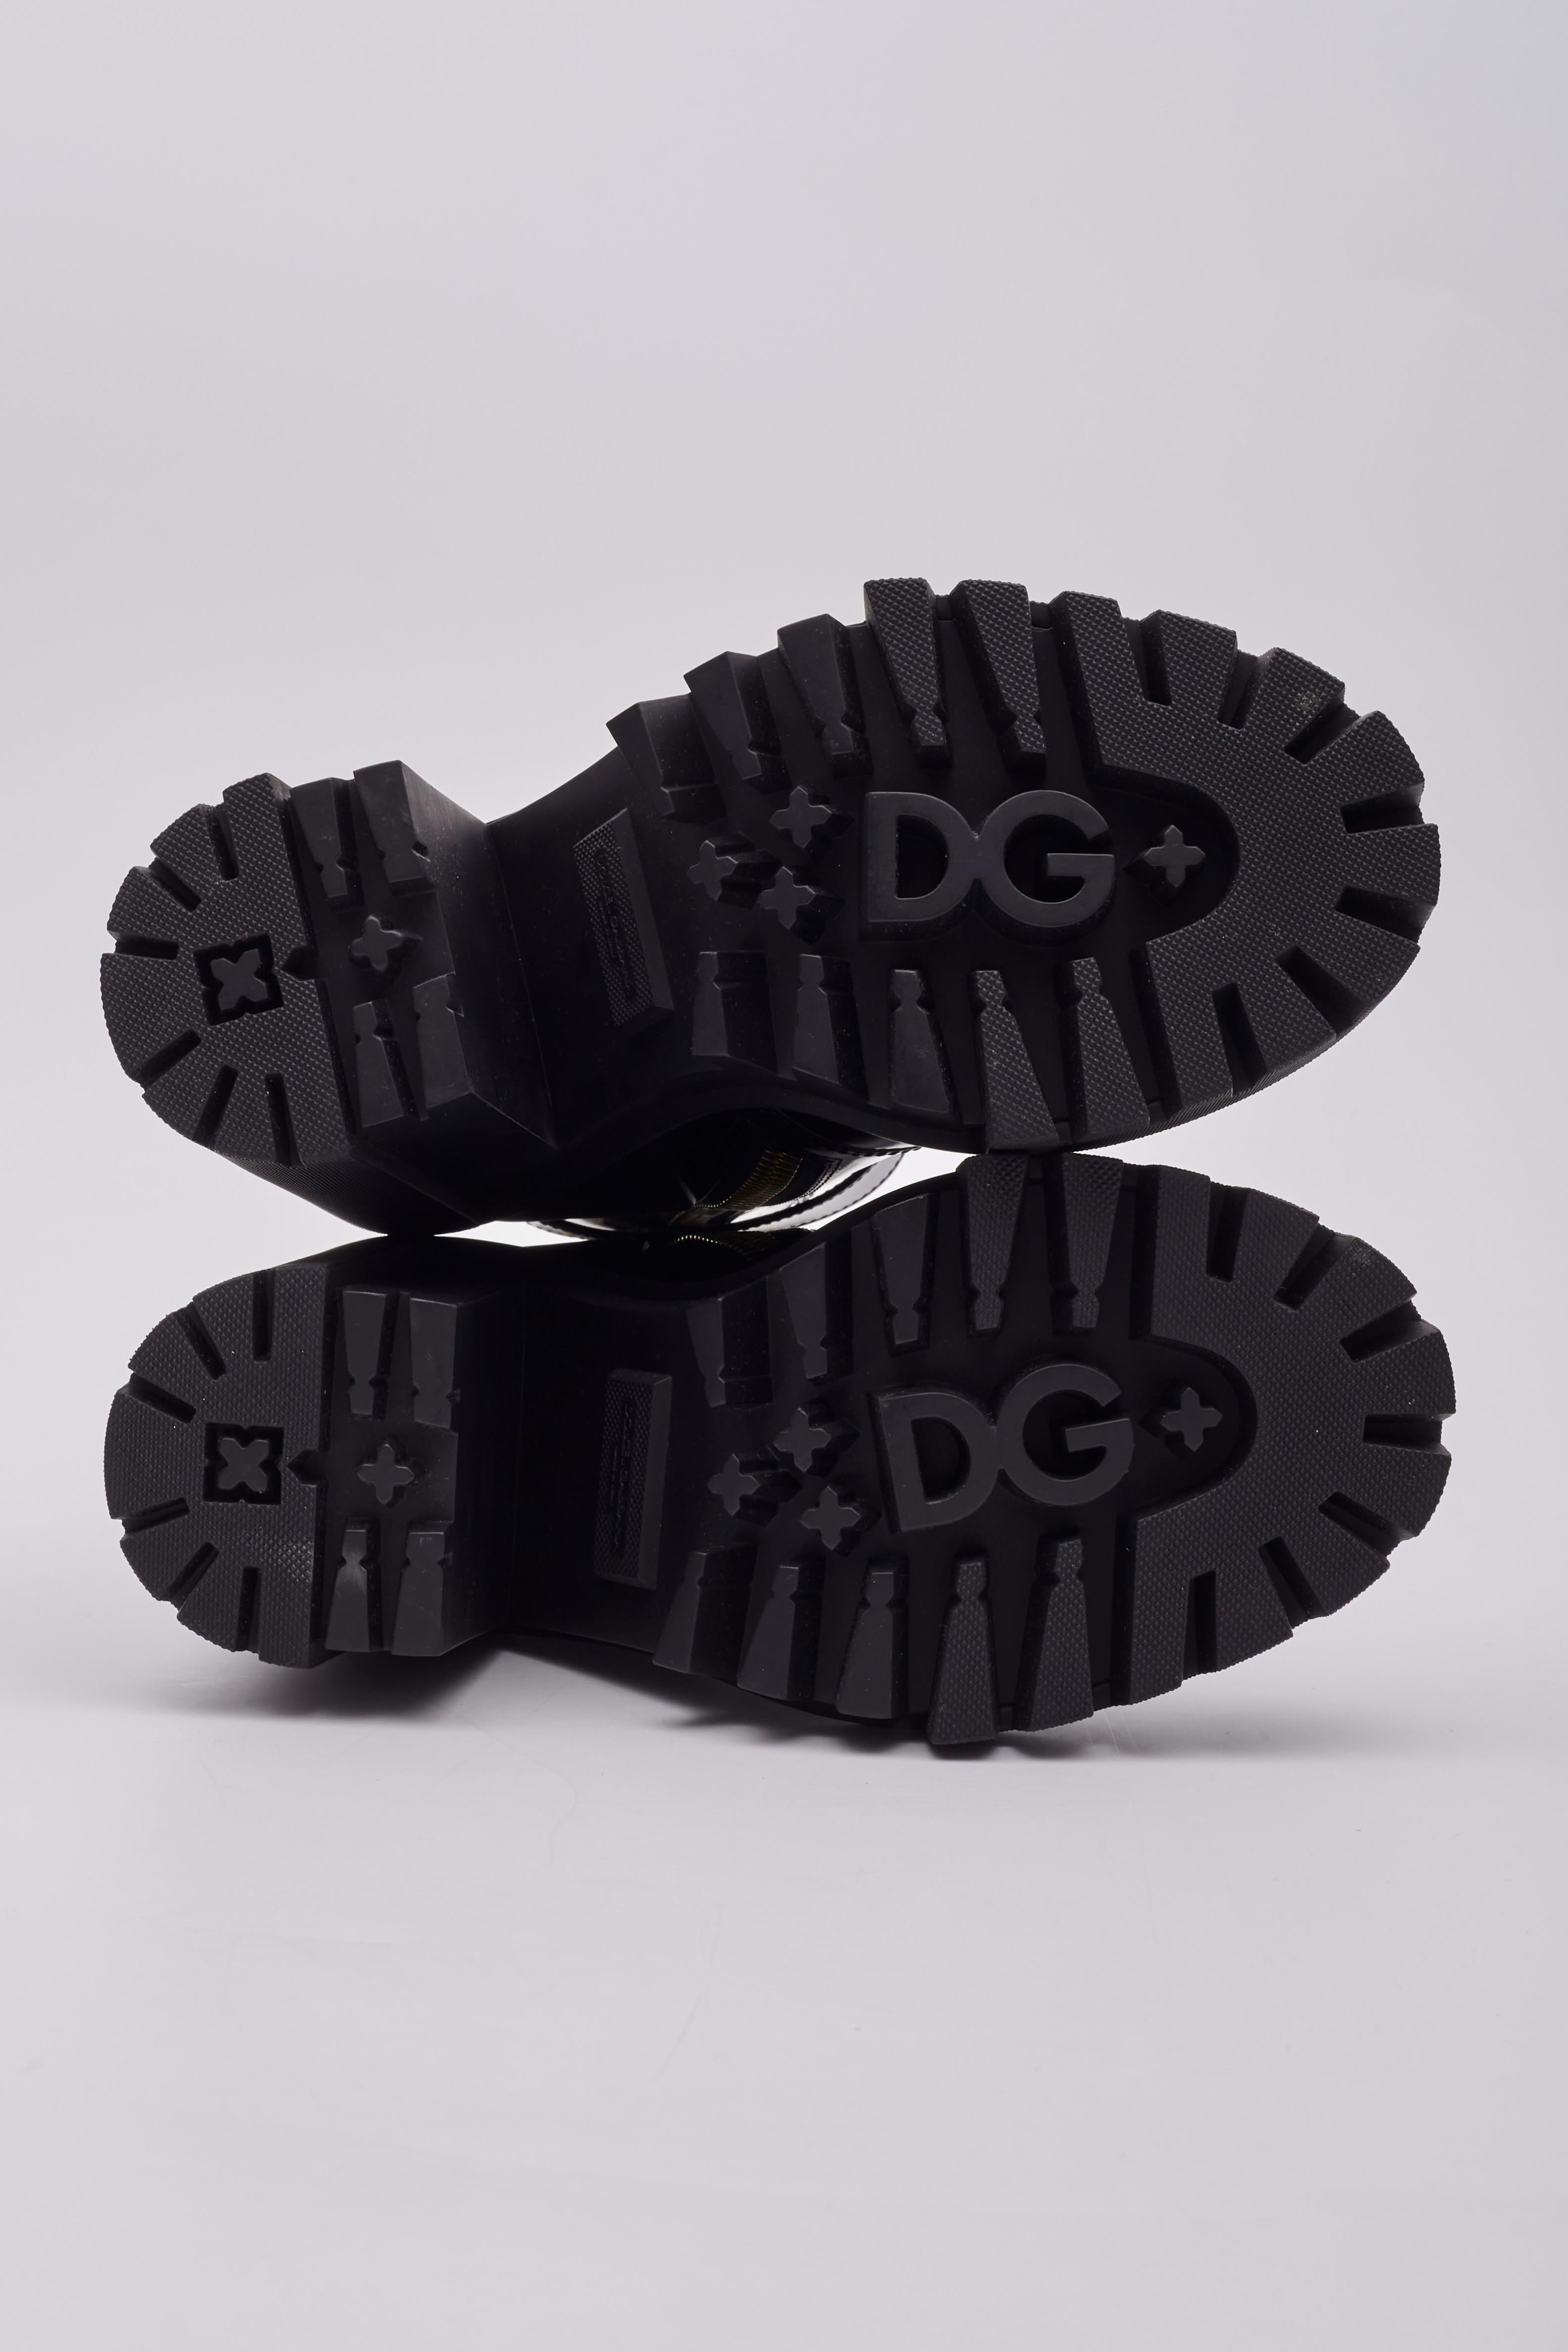 Dolce & Gabbana Logo Charm Black Leather Platform Ankle Boots For Sale 2